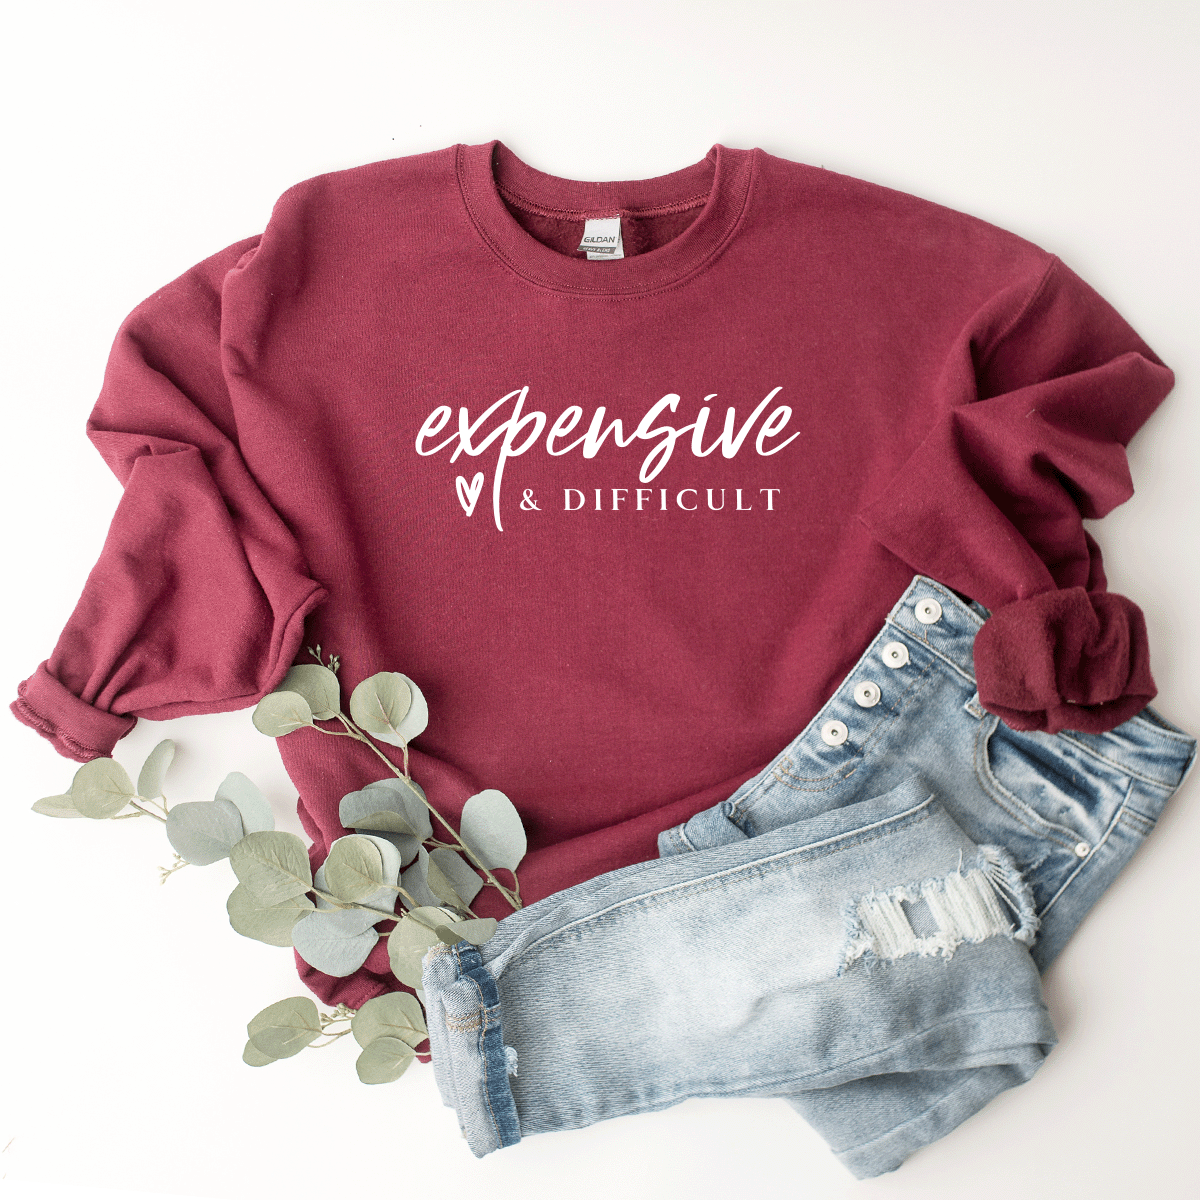 Expensive & Difficult - Sweatshirt